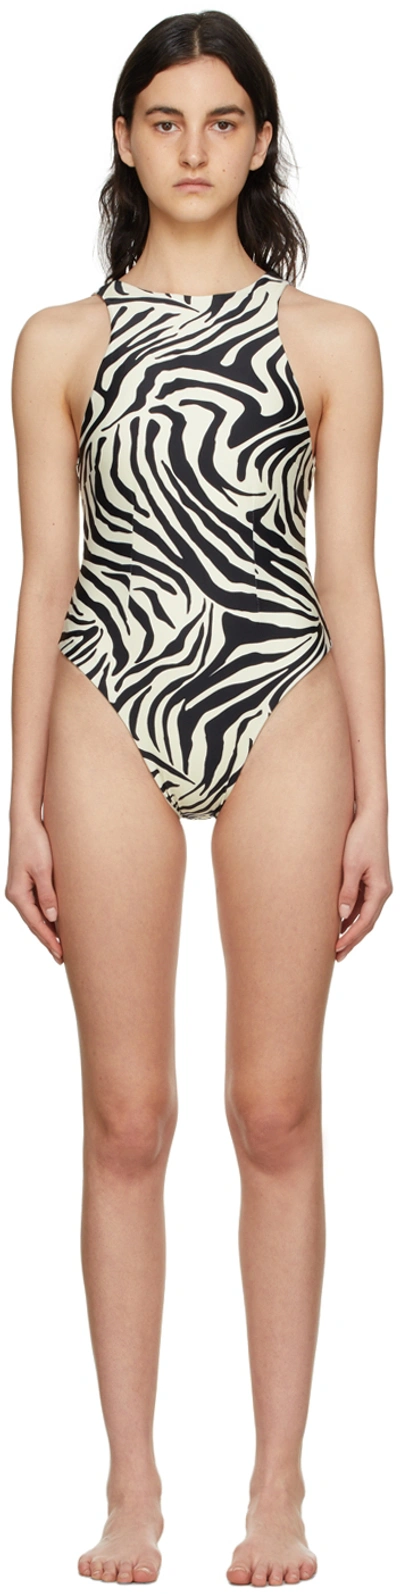 Haight White Twy One-piece Swimsuit In Bw Zebra